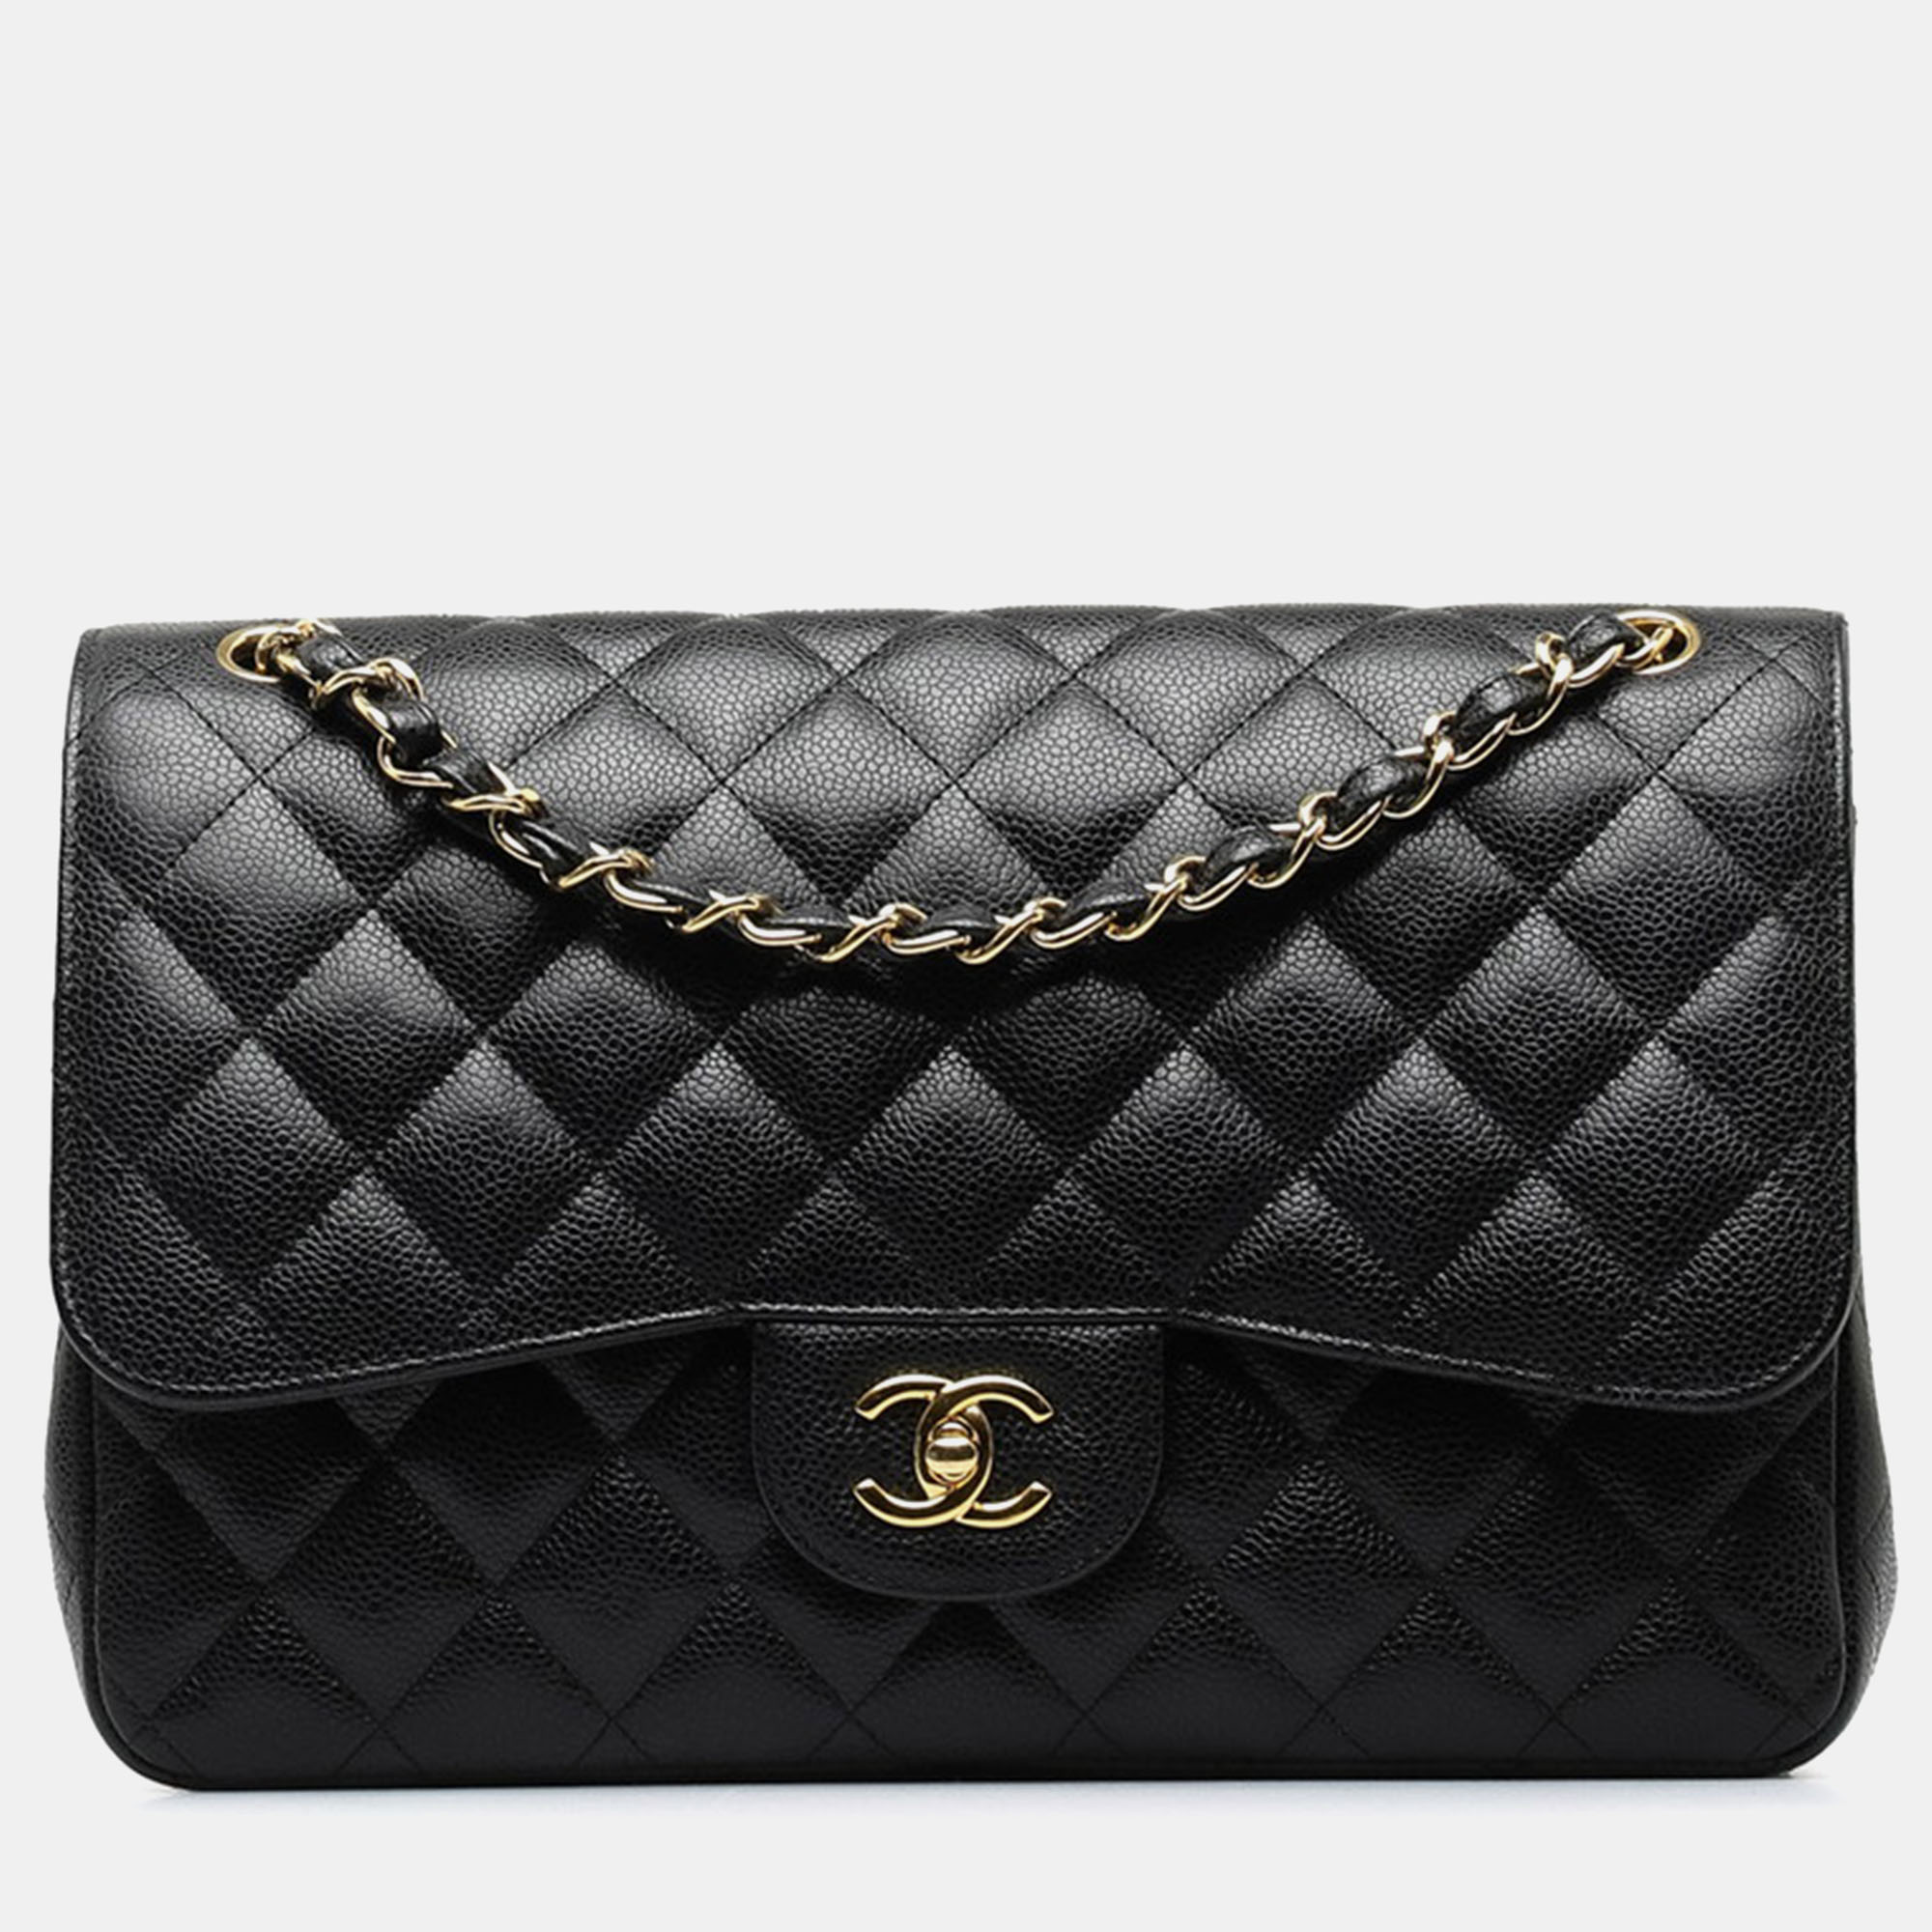 Chanel black caviar leather jumbo classic double flap shoulder bags